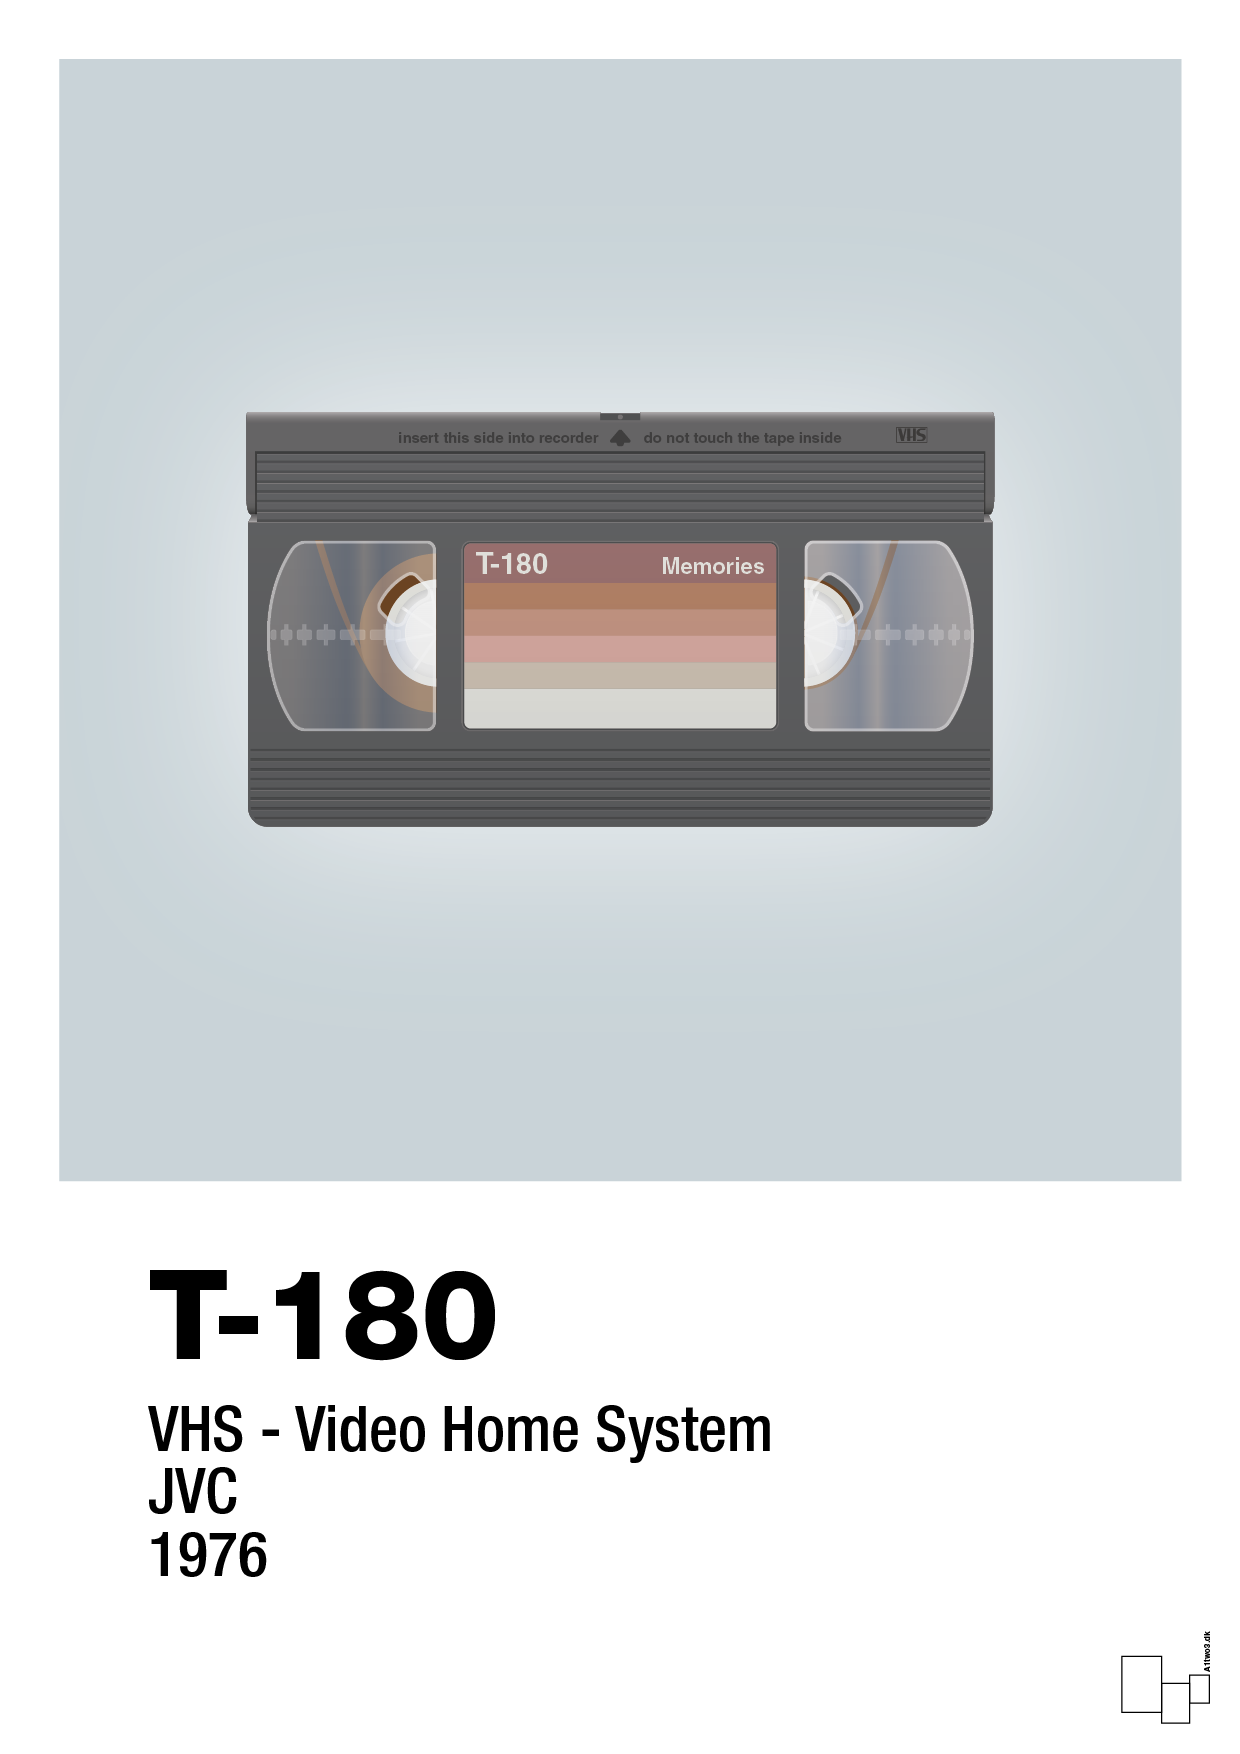 videobånd t-180 - Plakat med Grafik i Light Drizzle